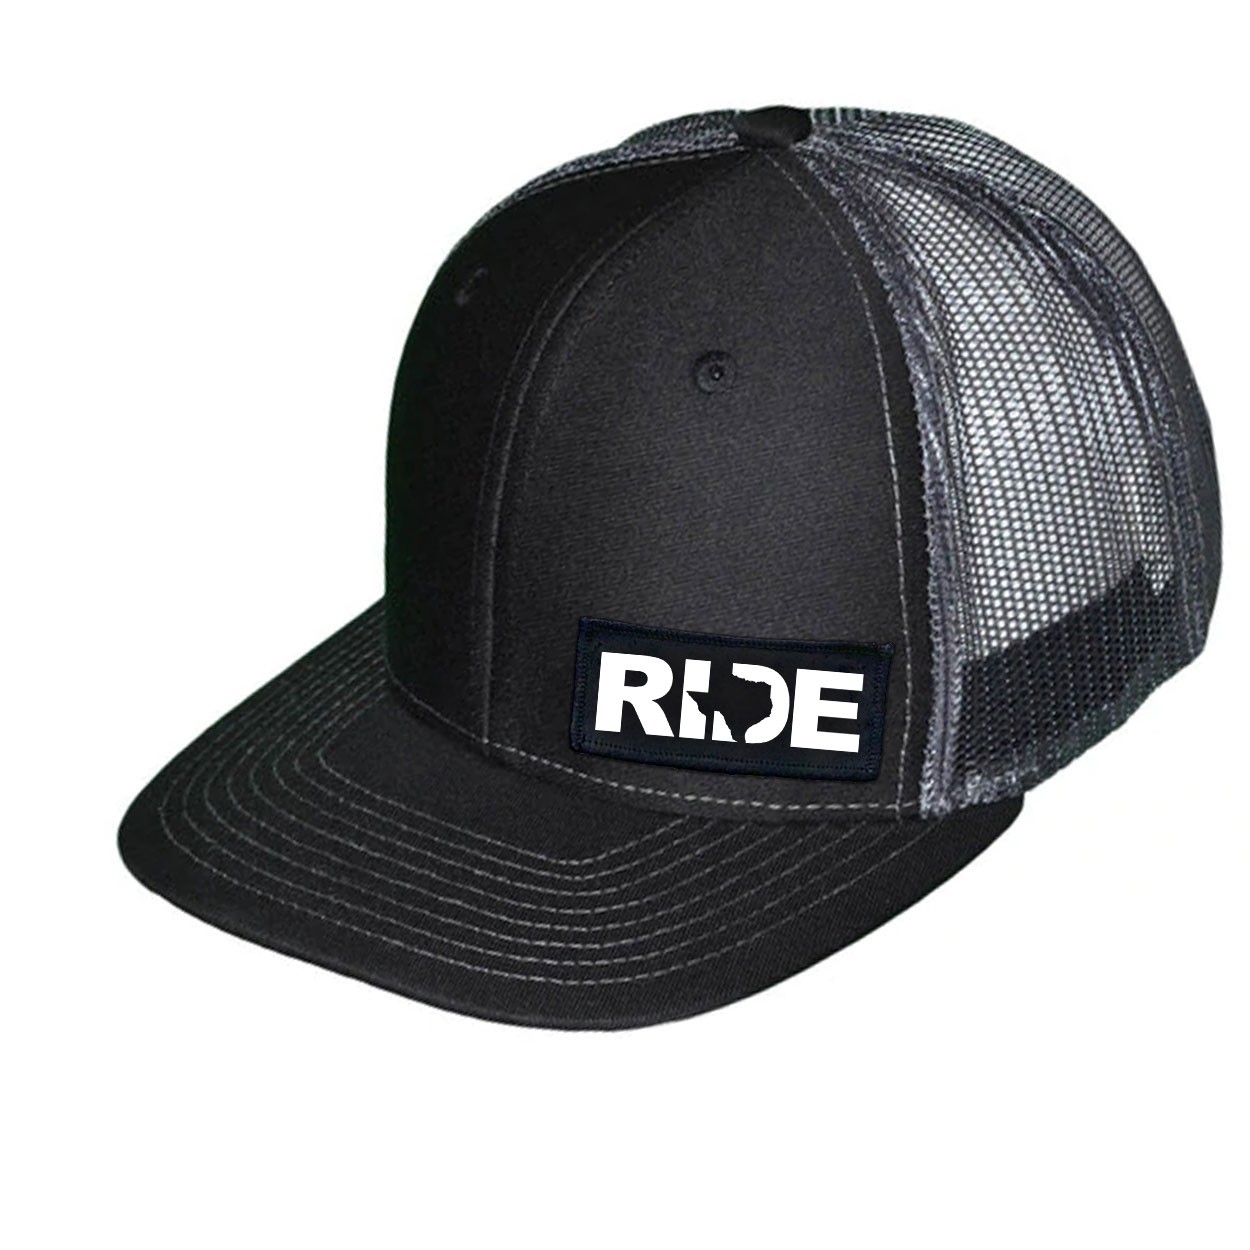 Ride Texas Night Out Woven Patch Snapback Trucker Hat Black/Dark Gray (White Logo)